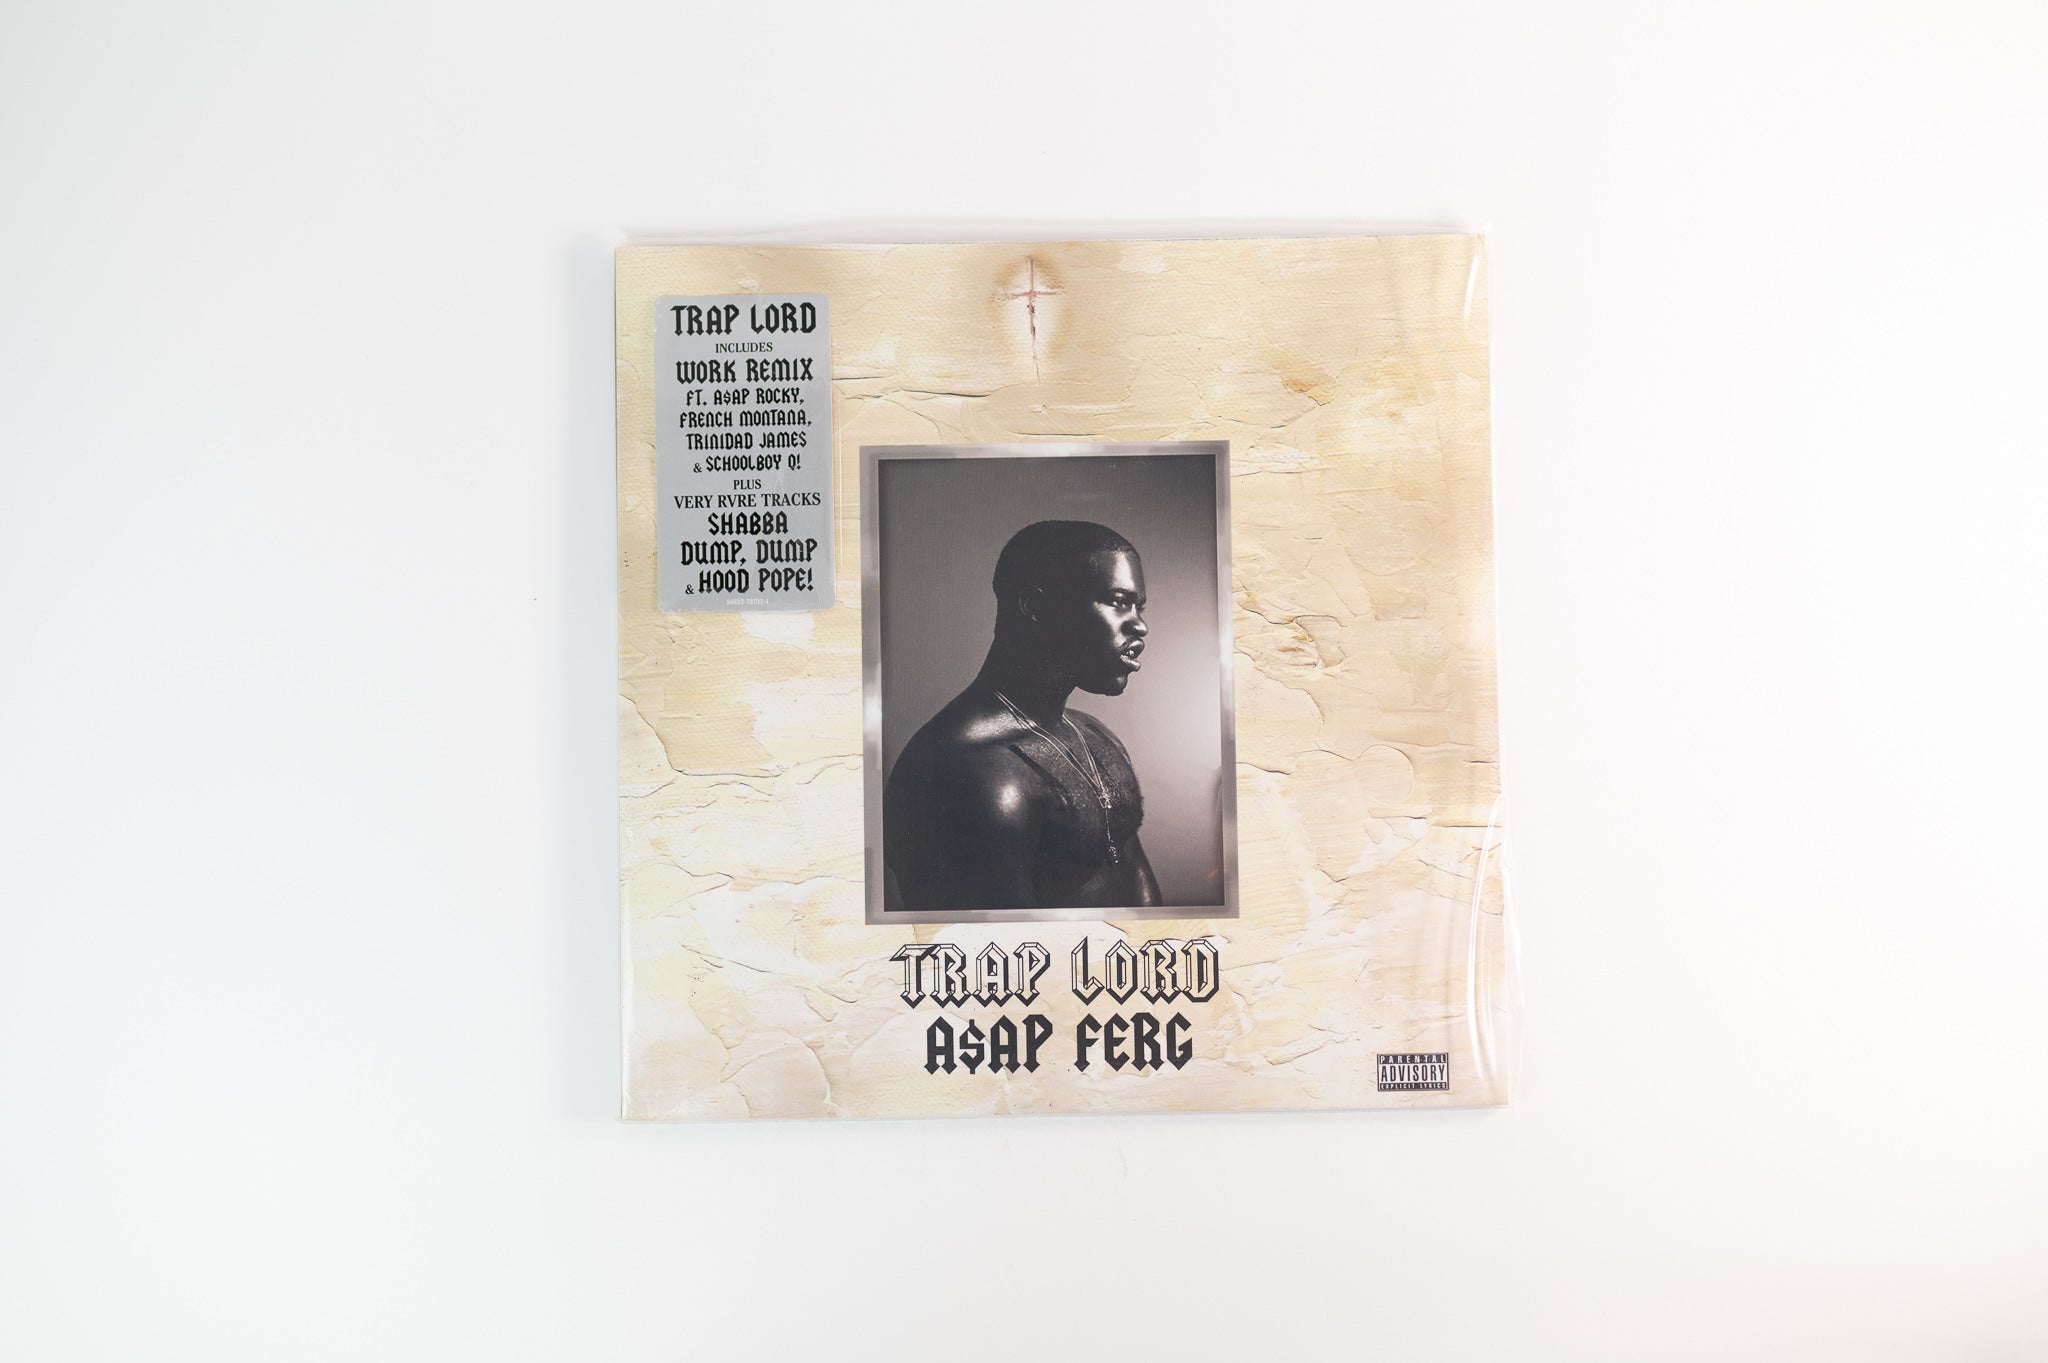 ASAP Ferg - Trap Lord on RCA